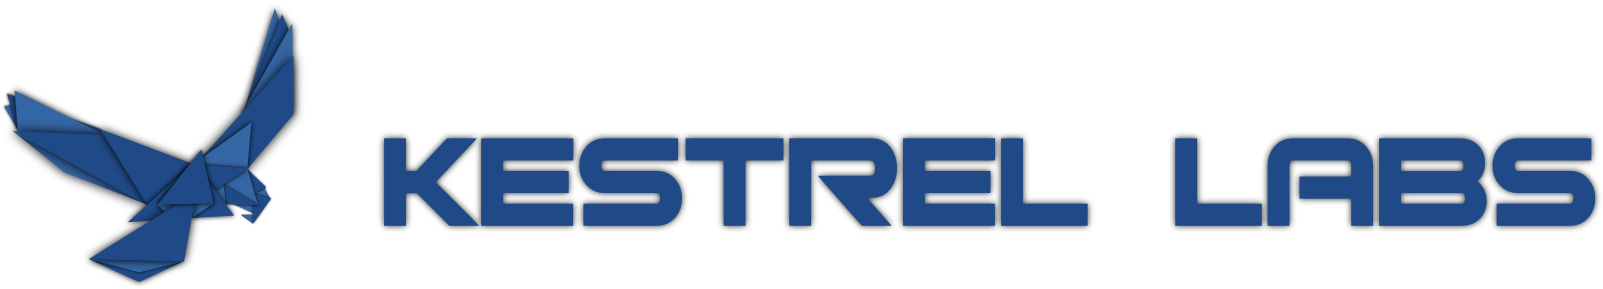 Kestrel Labs logo